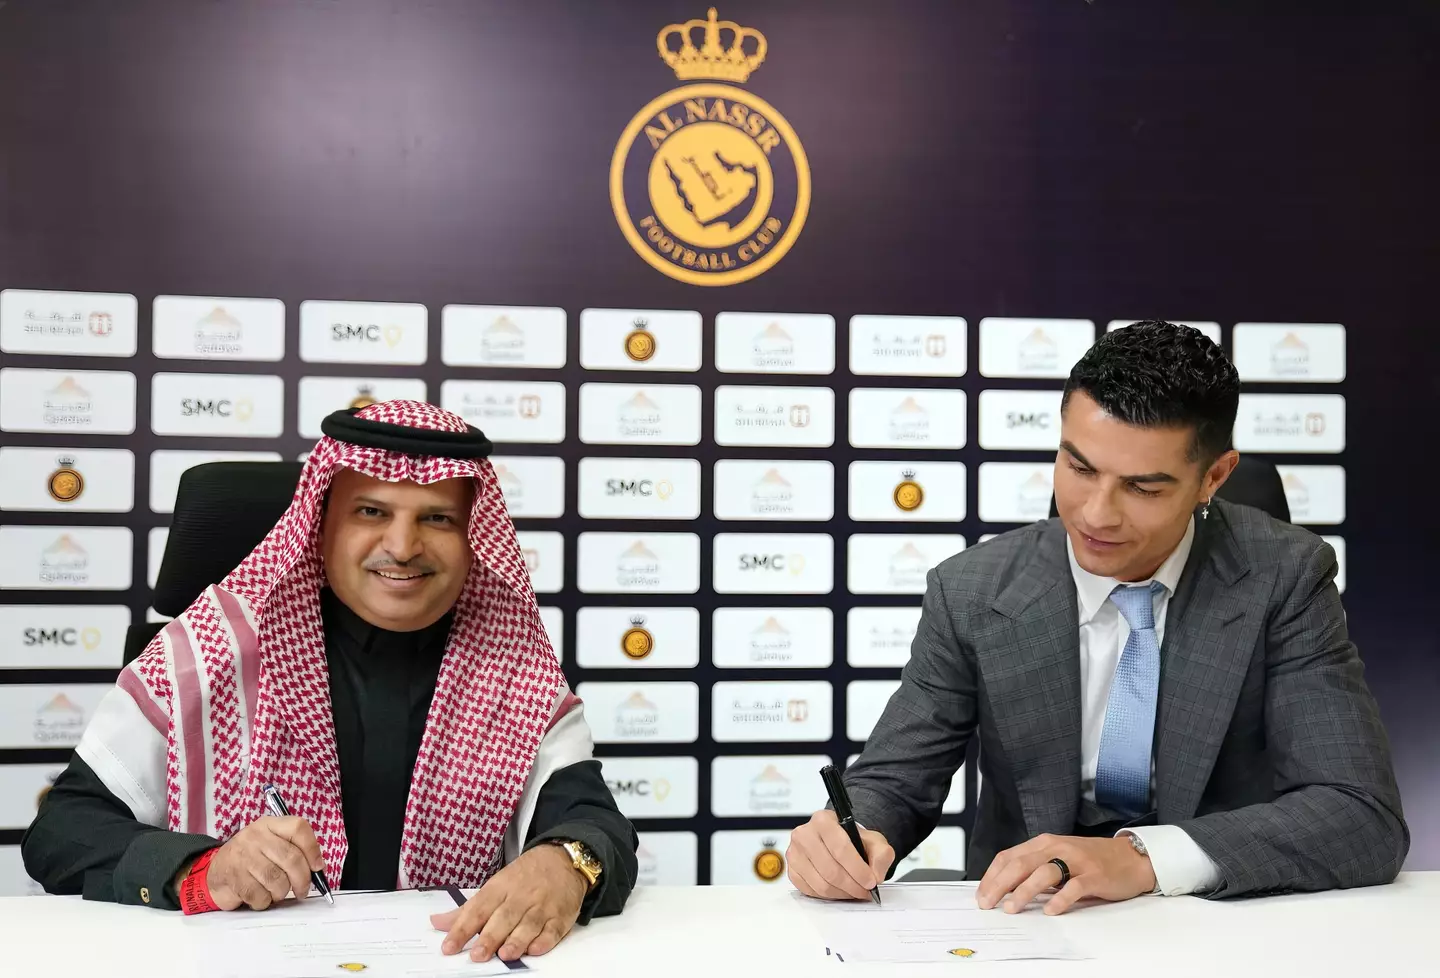 Ronaldo signing his Al Nassr contract. (Image